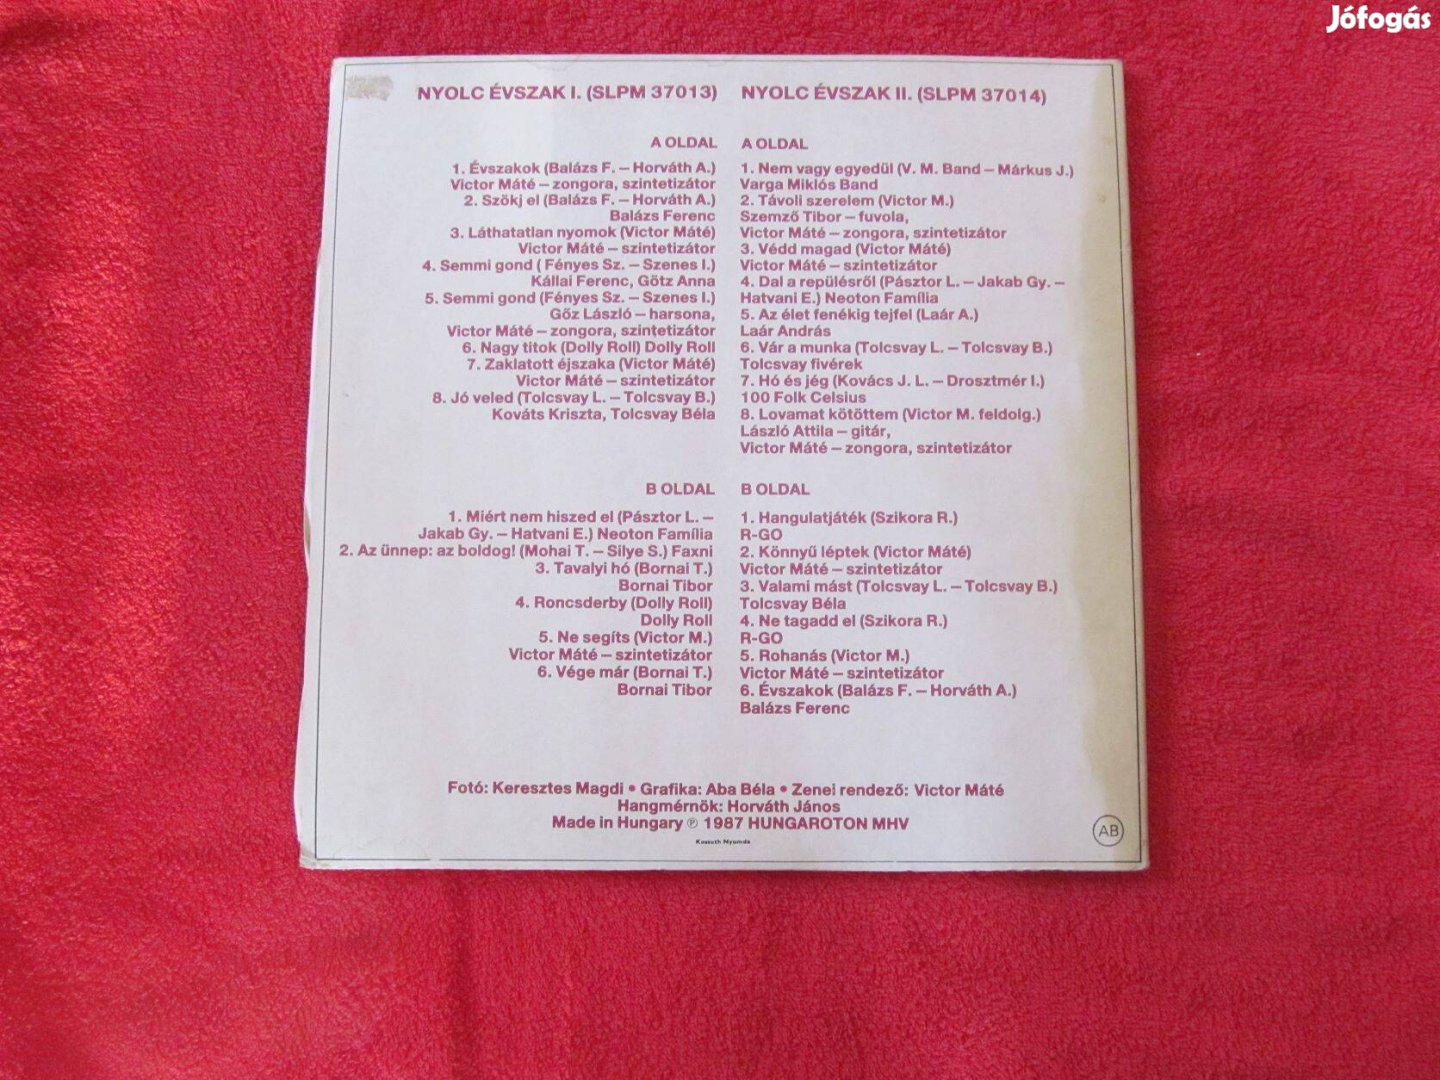 Nyolc évszak dupla LP /Dolly-Roll, R-GO, Neoton /